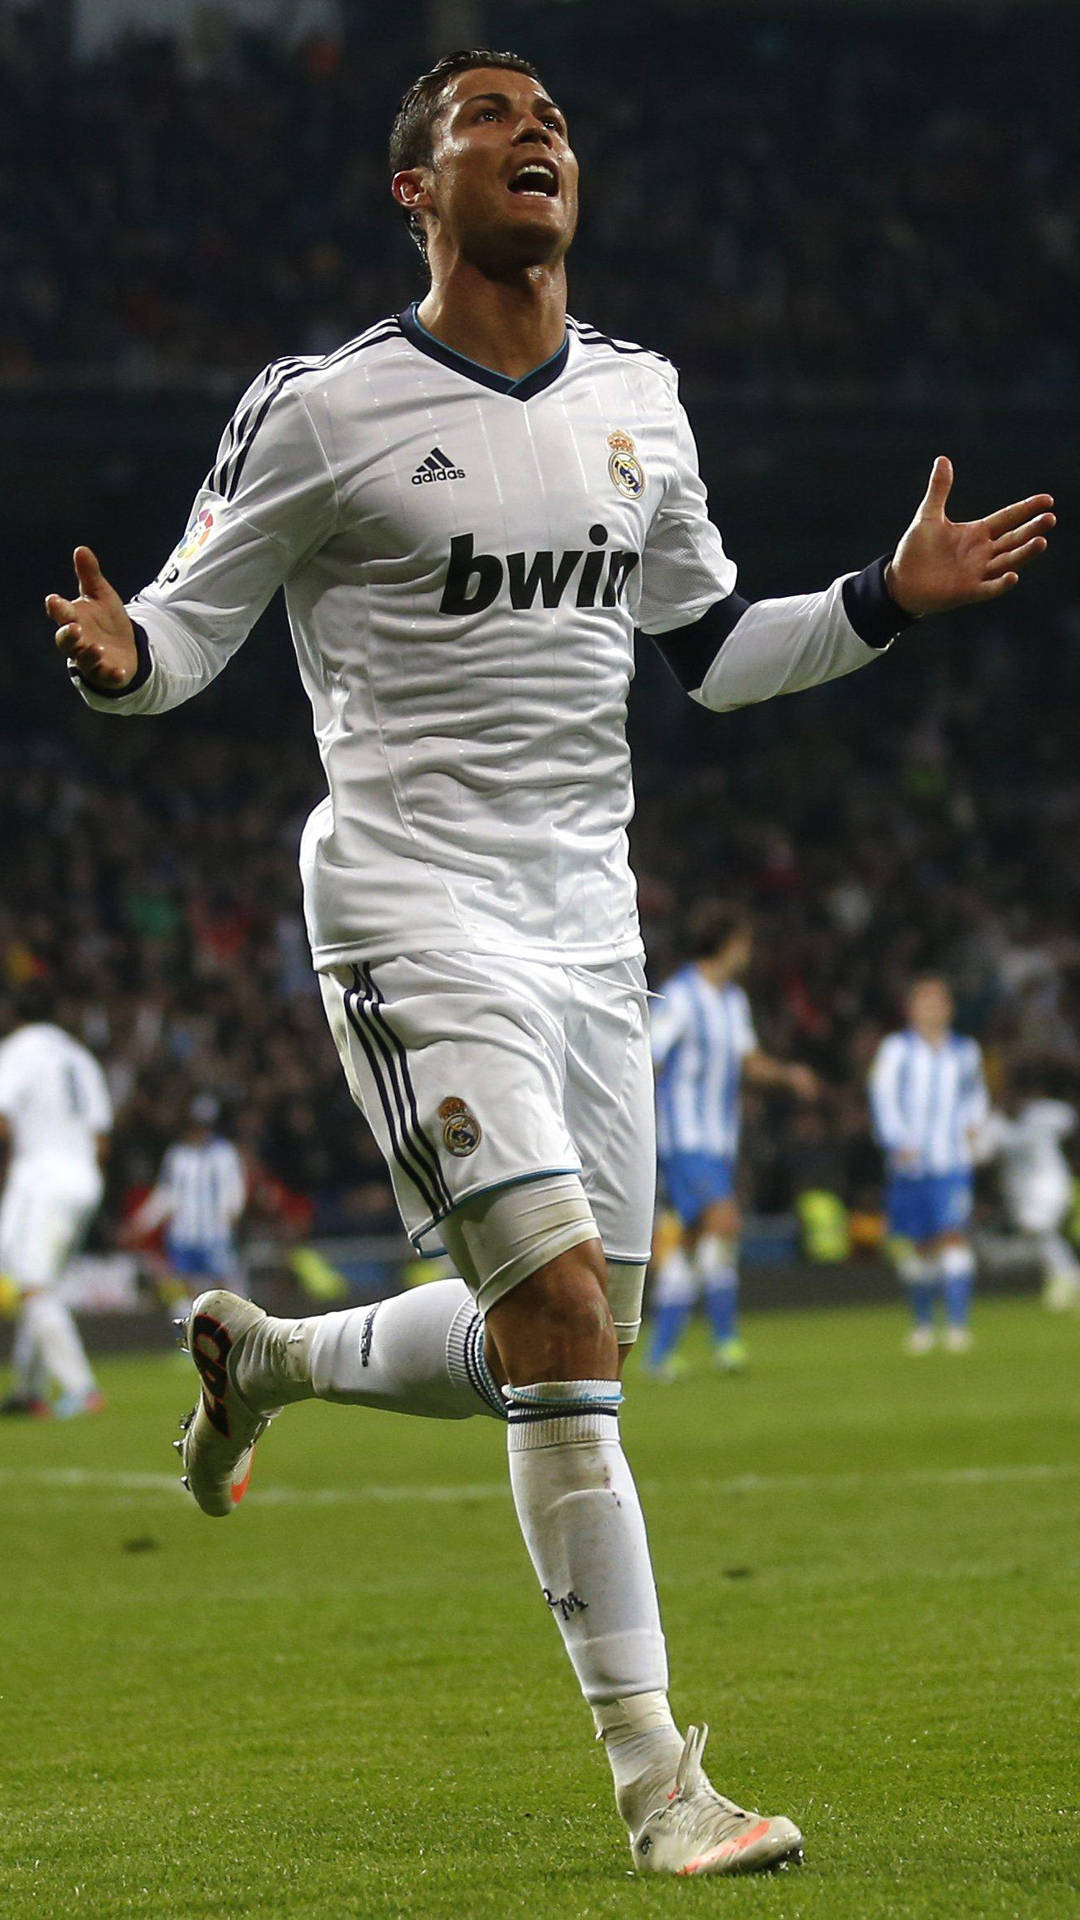 Bwin White Jersey Cristiano Ronaldo Iphone Background